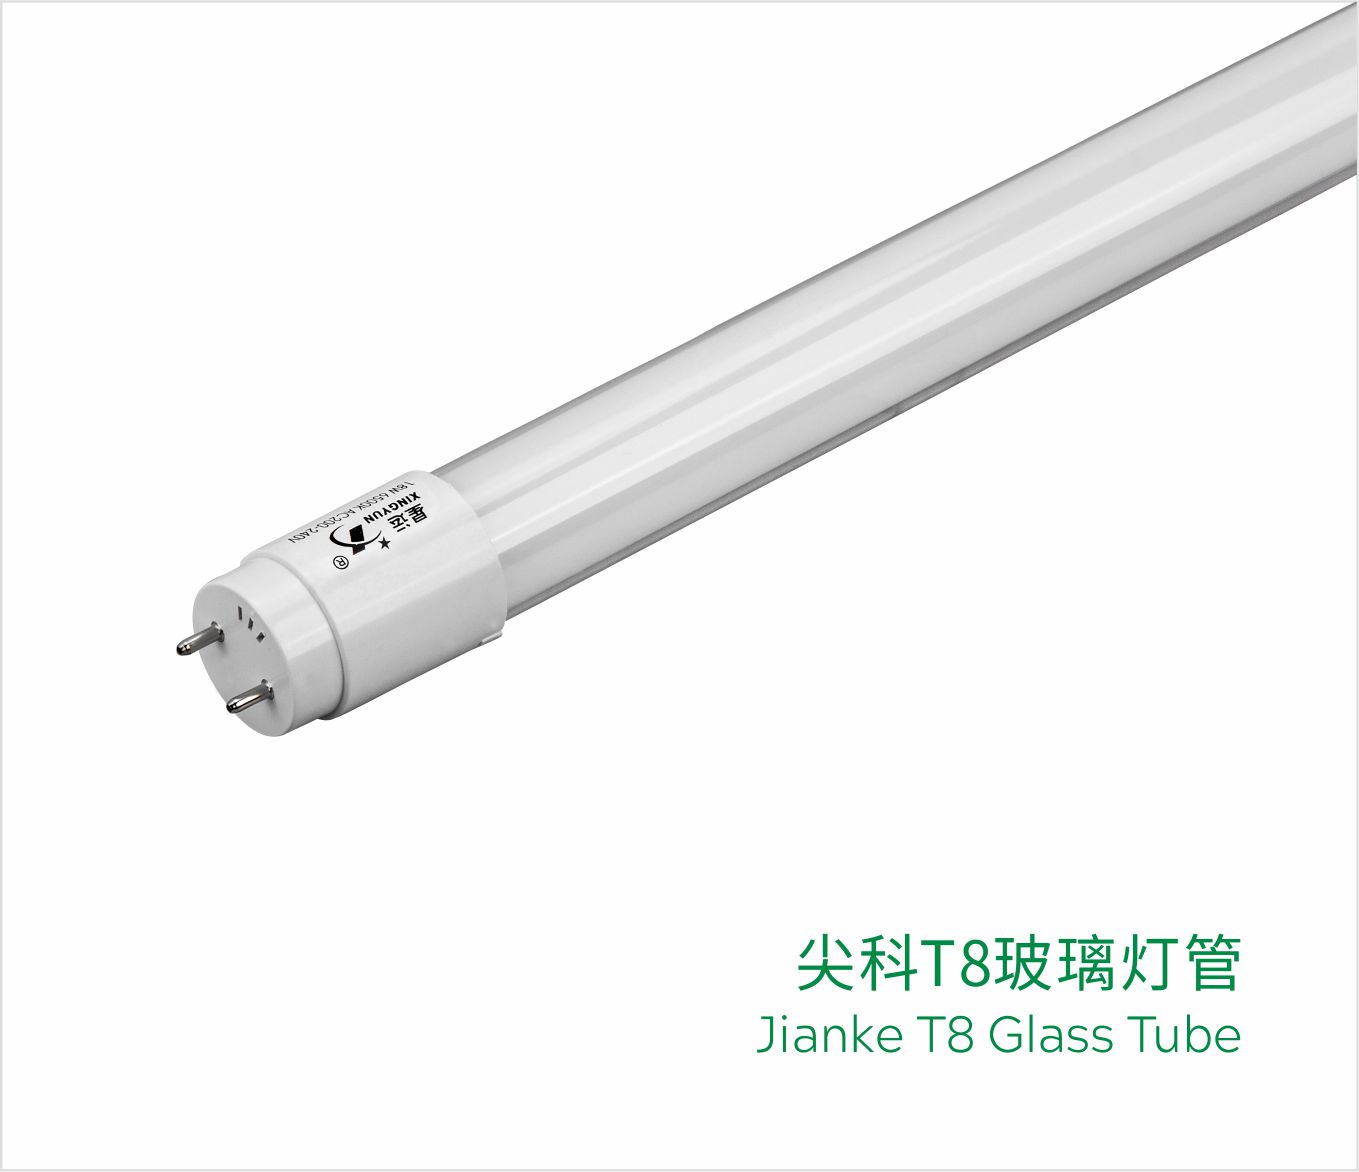 T8 Glass Tube